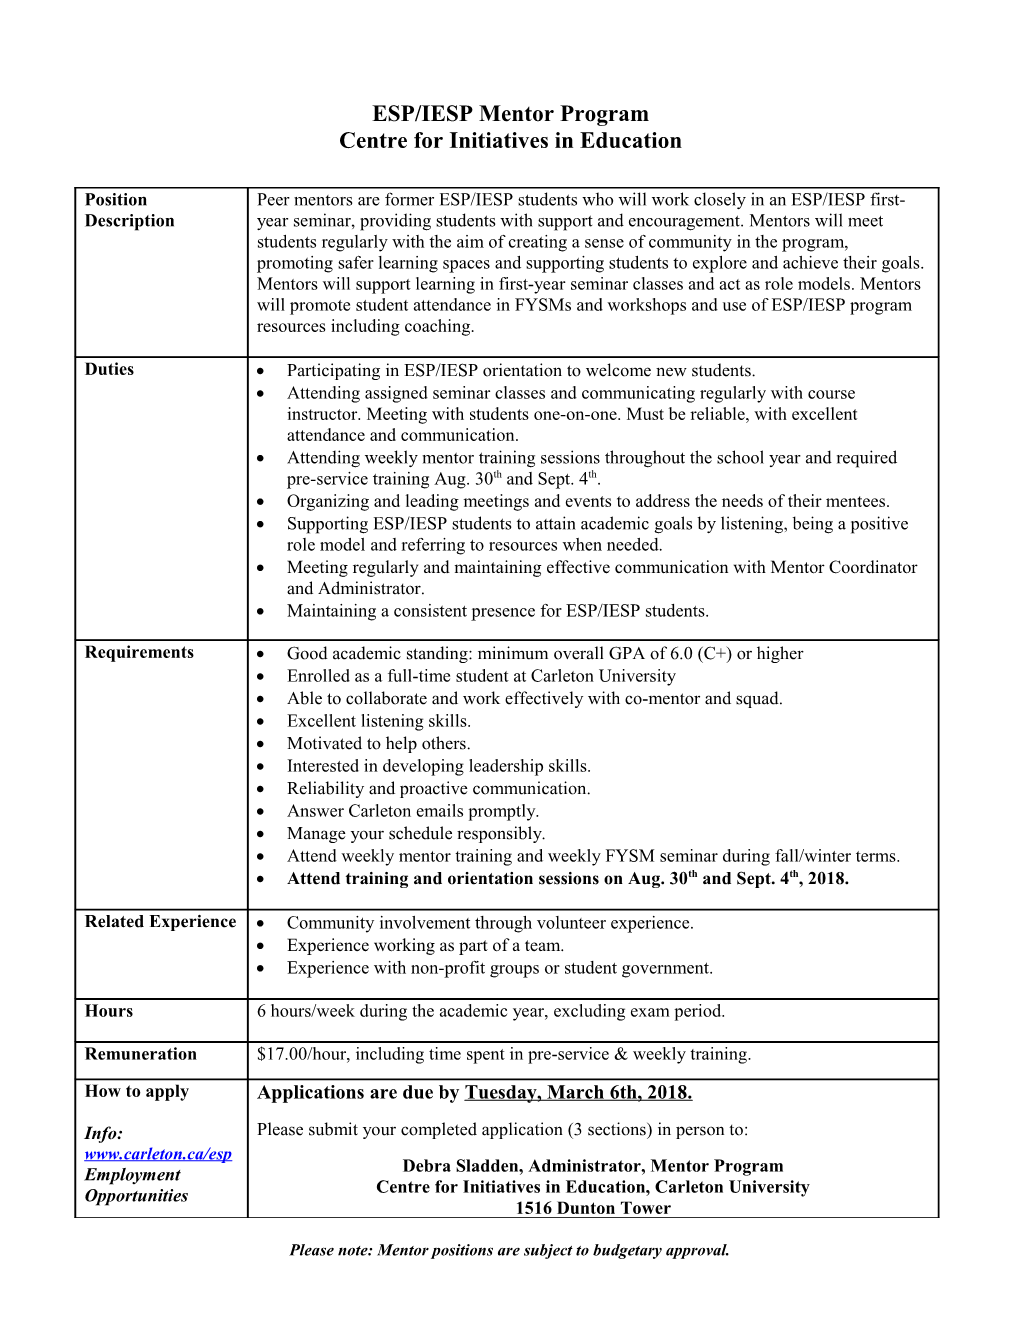 Cygnus Mentorship Program - Job Description